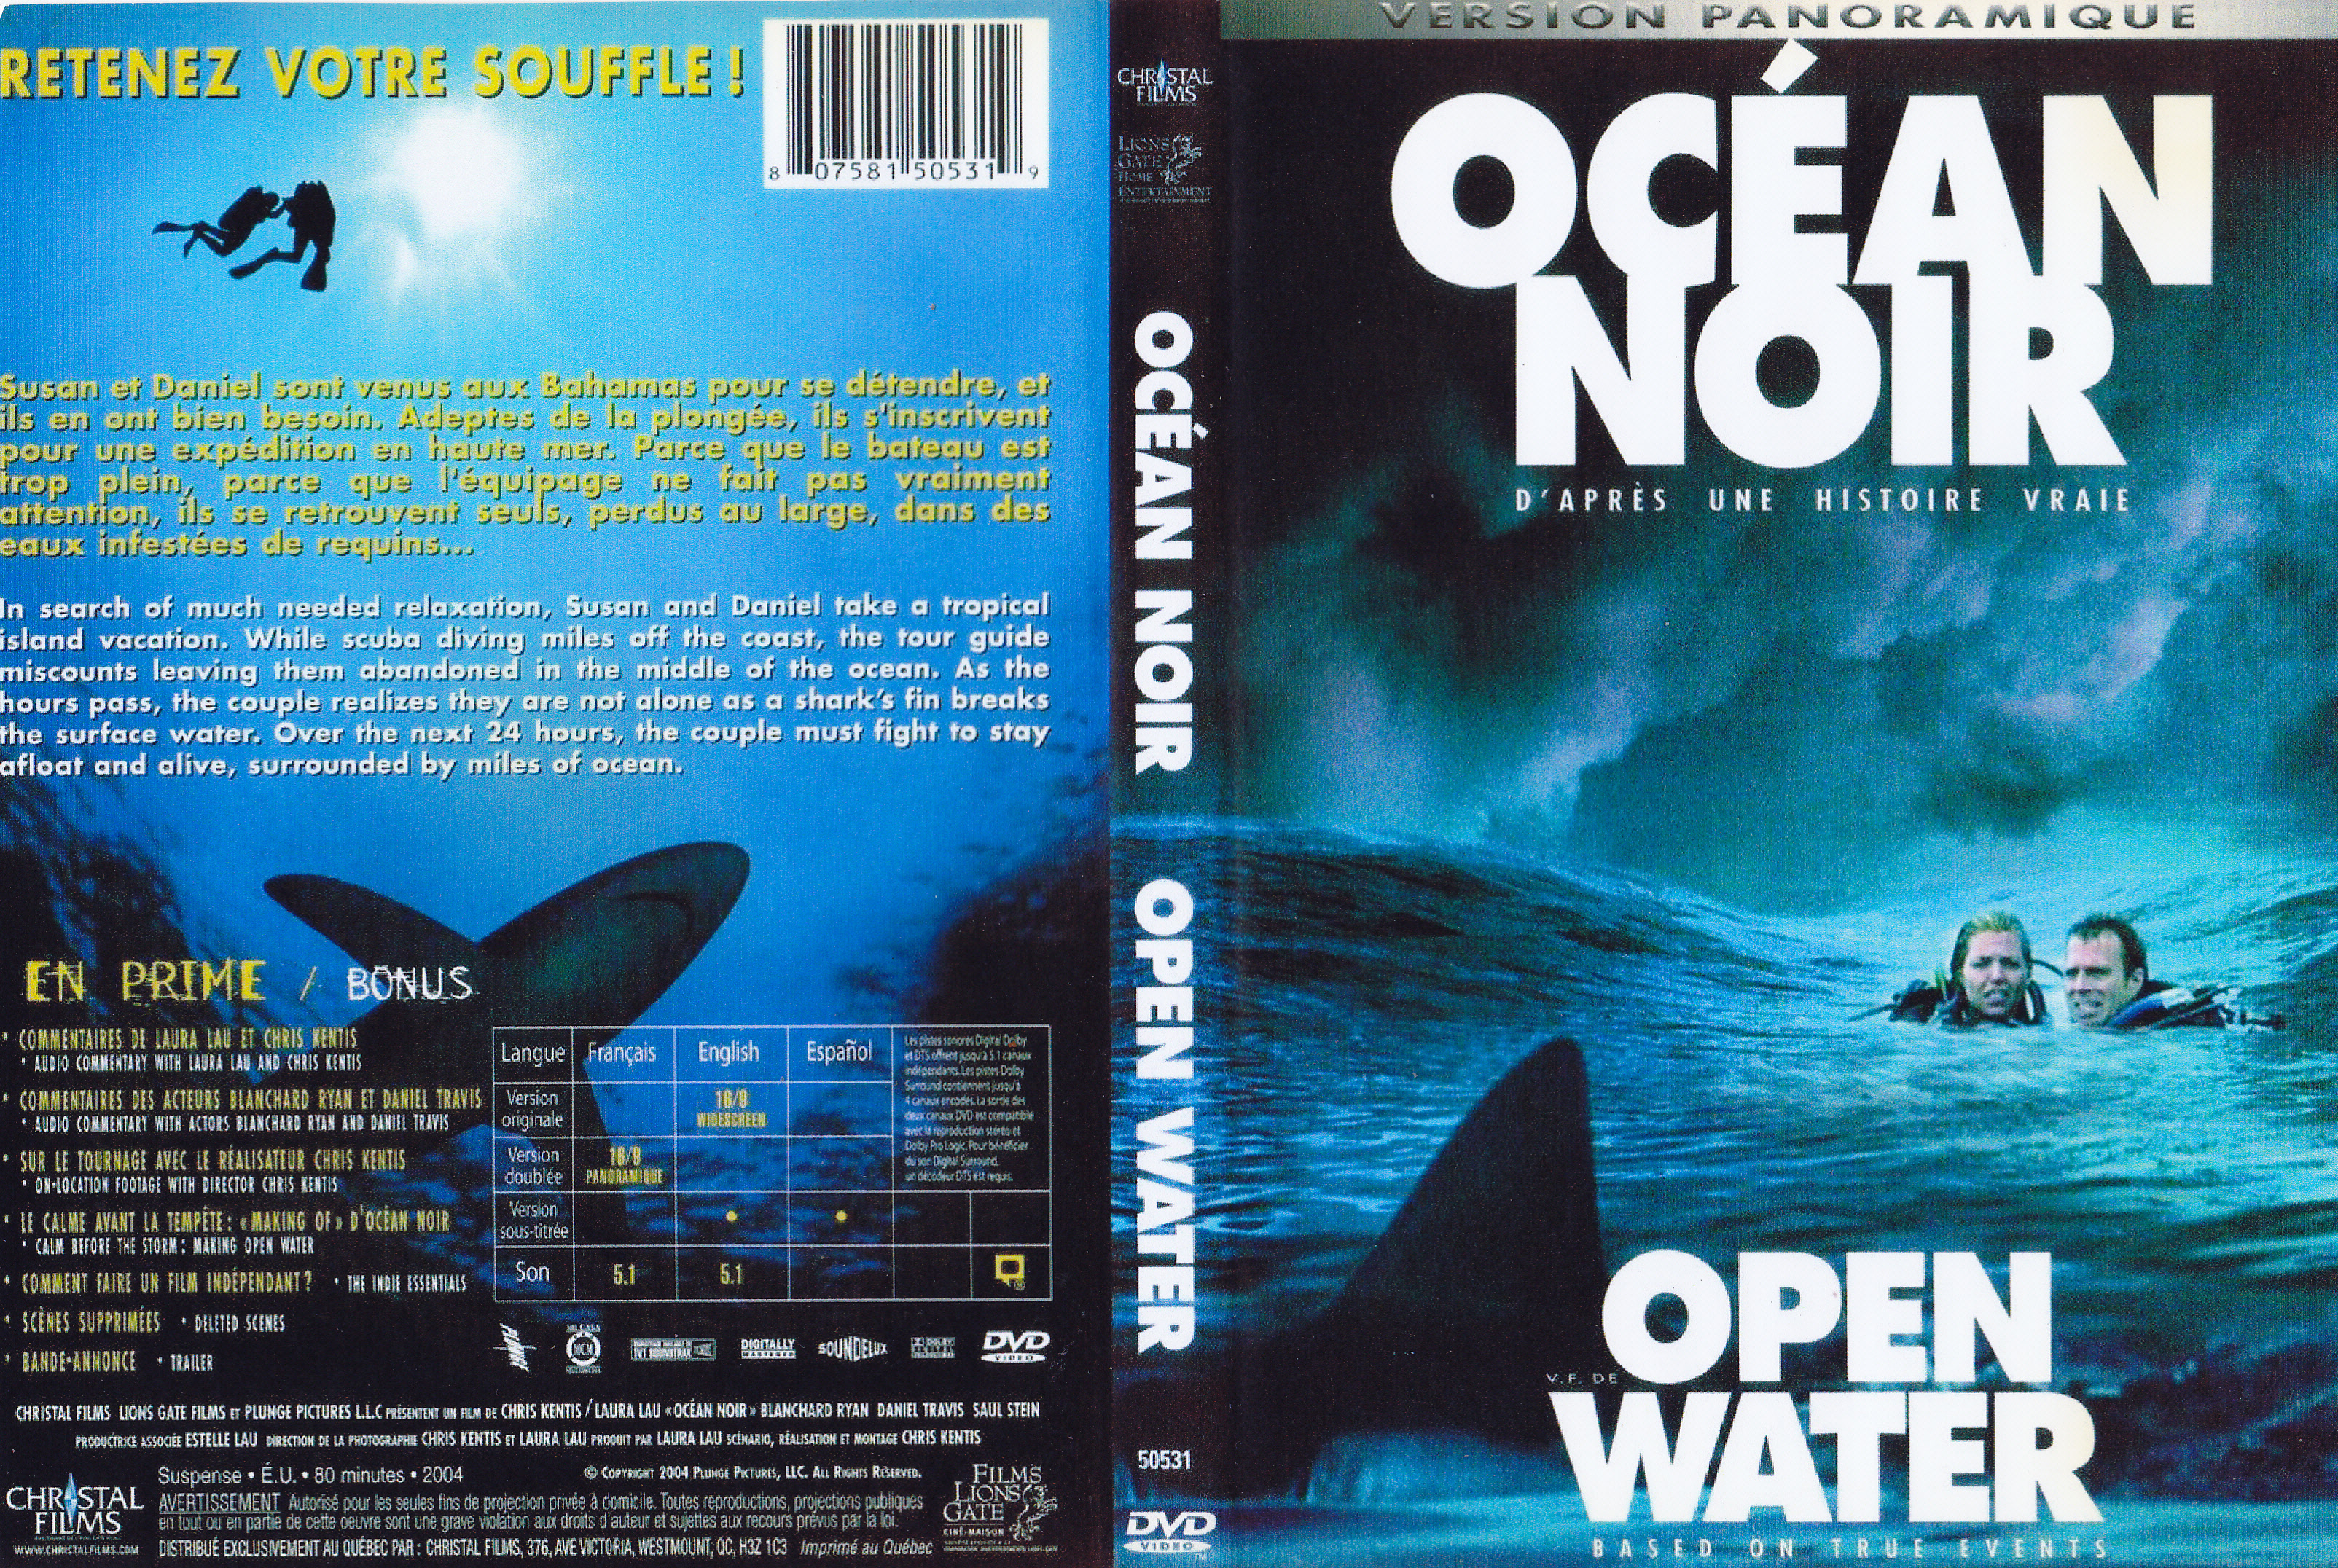 Jaquette DVD Ocean noir - Open water (Canadienne)